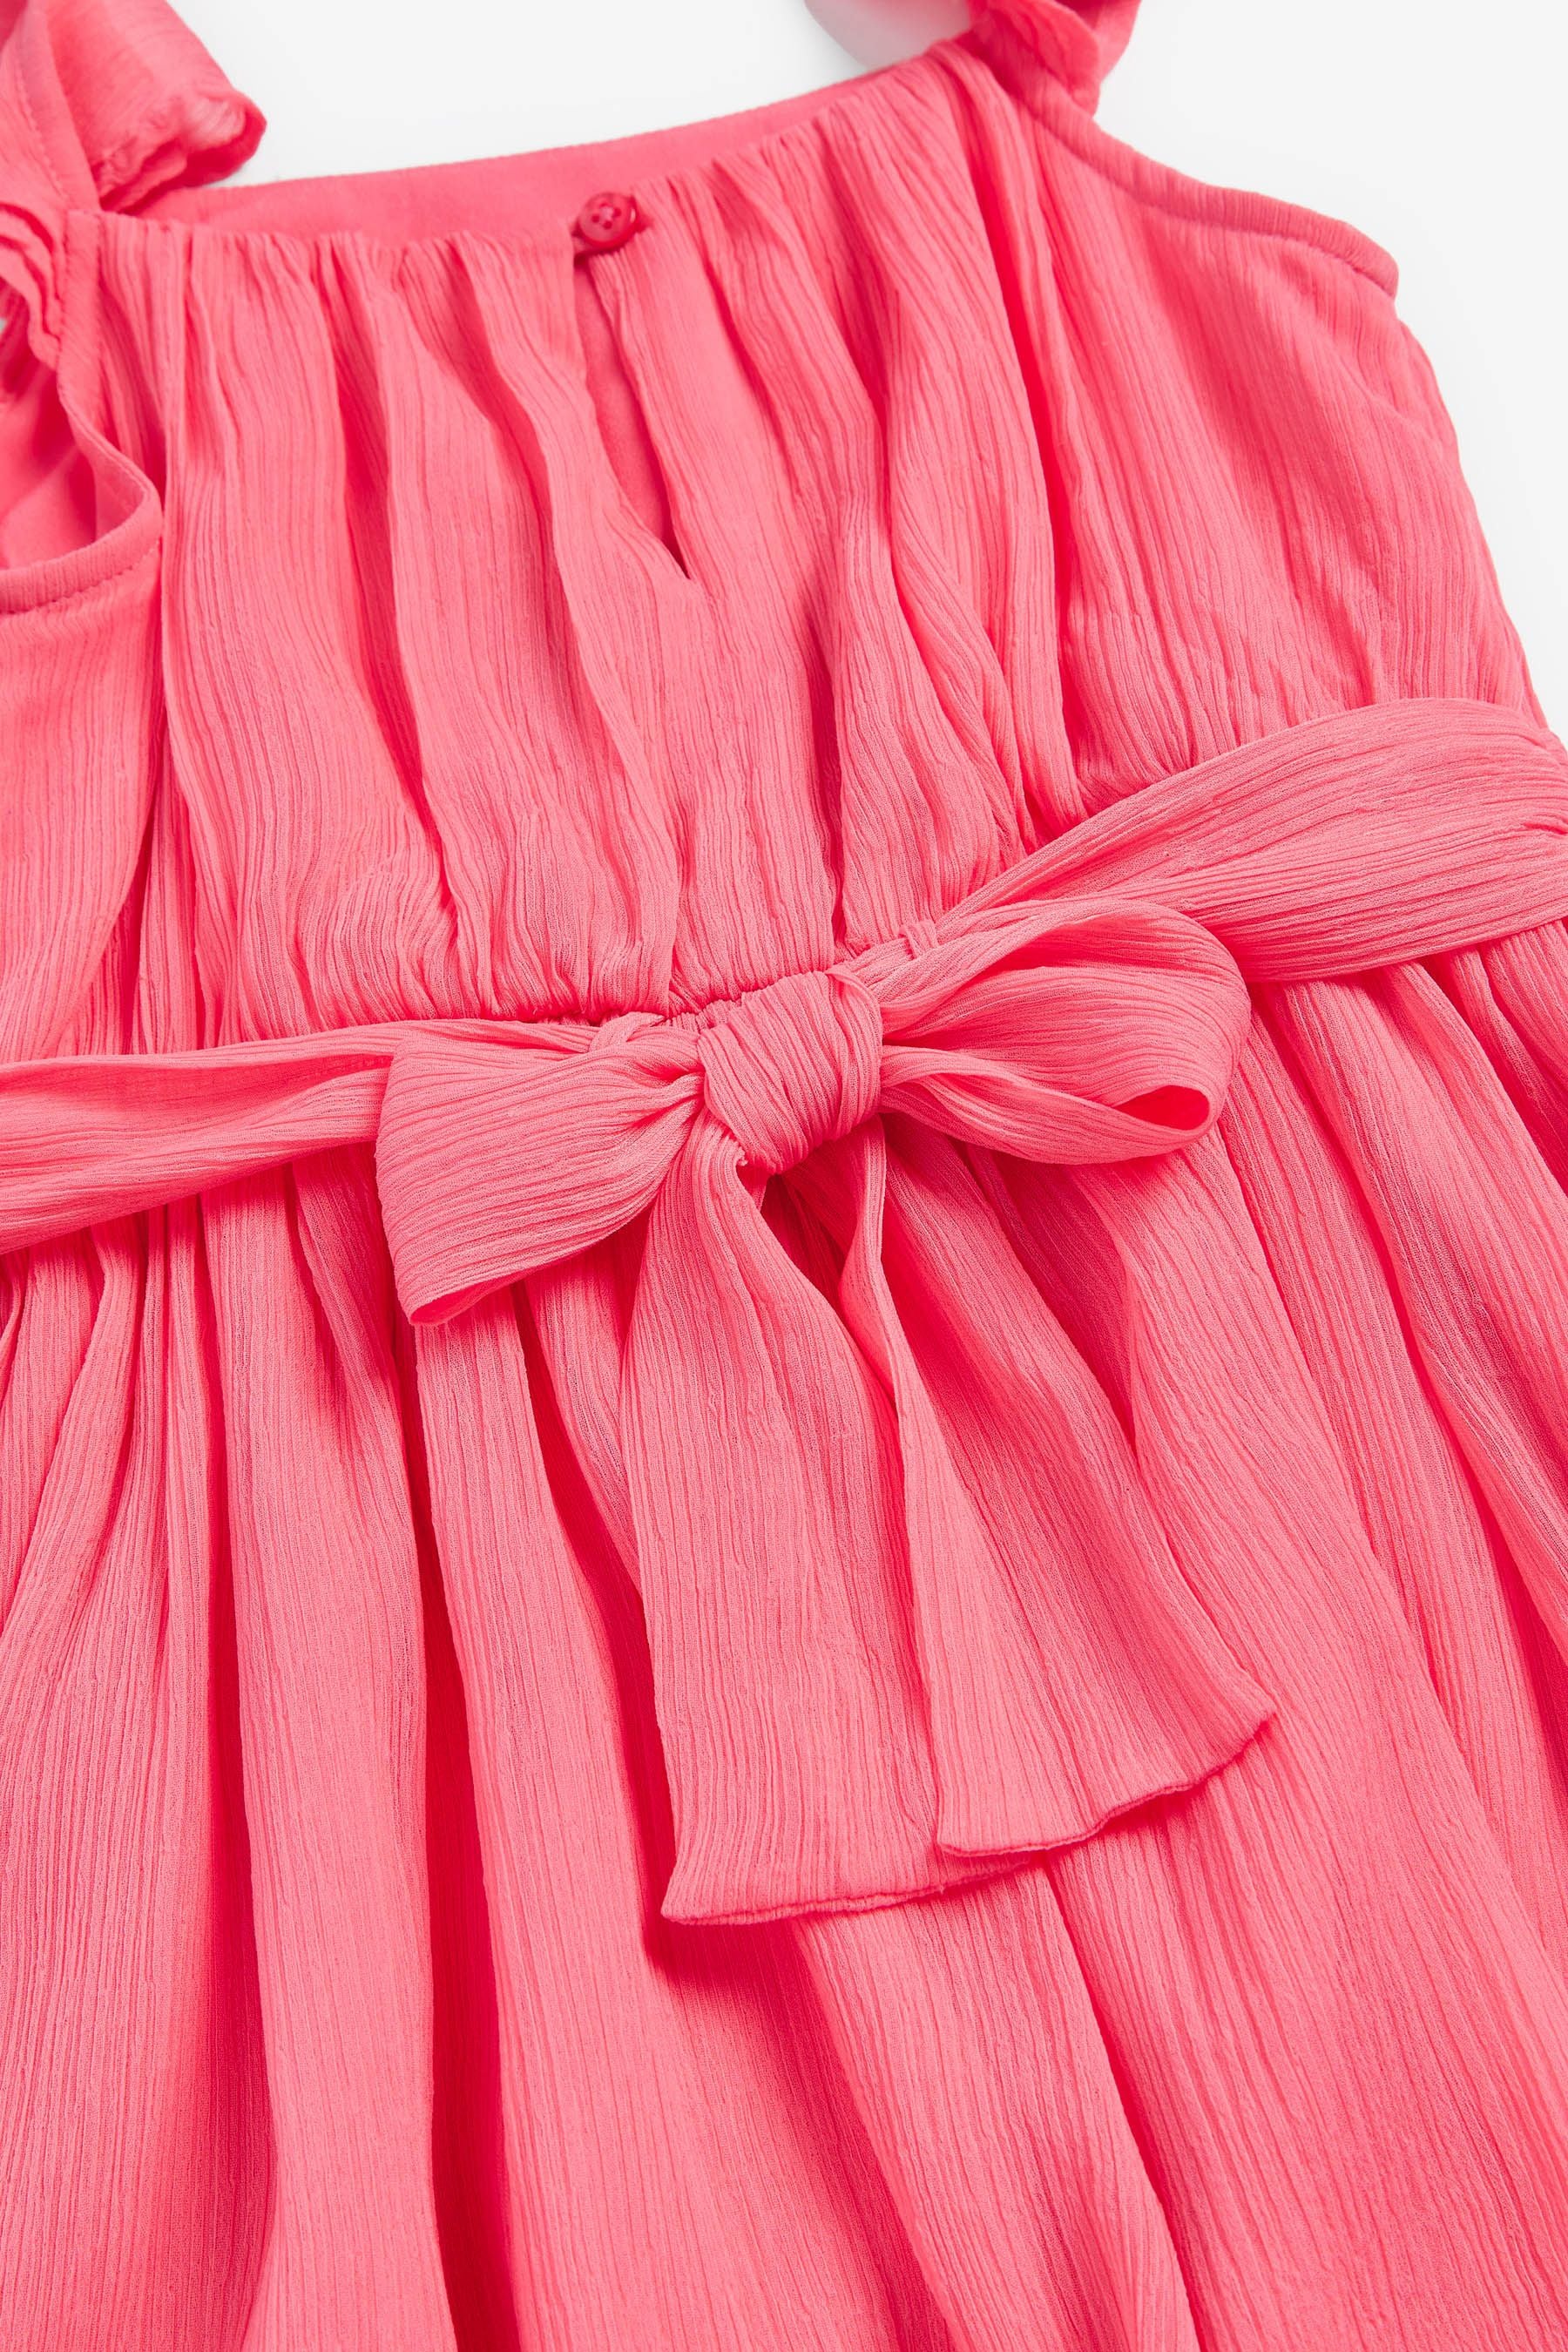 Coral Pink Chiffon Party Dress (3-16yrs)